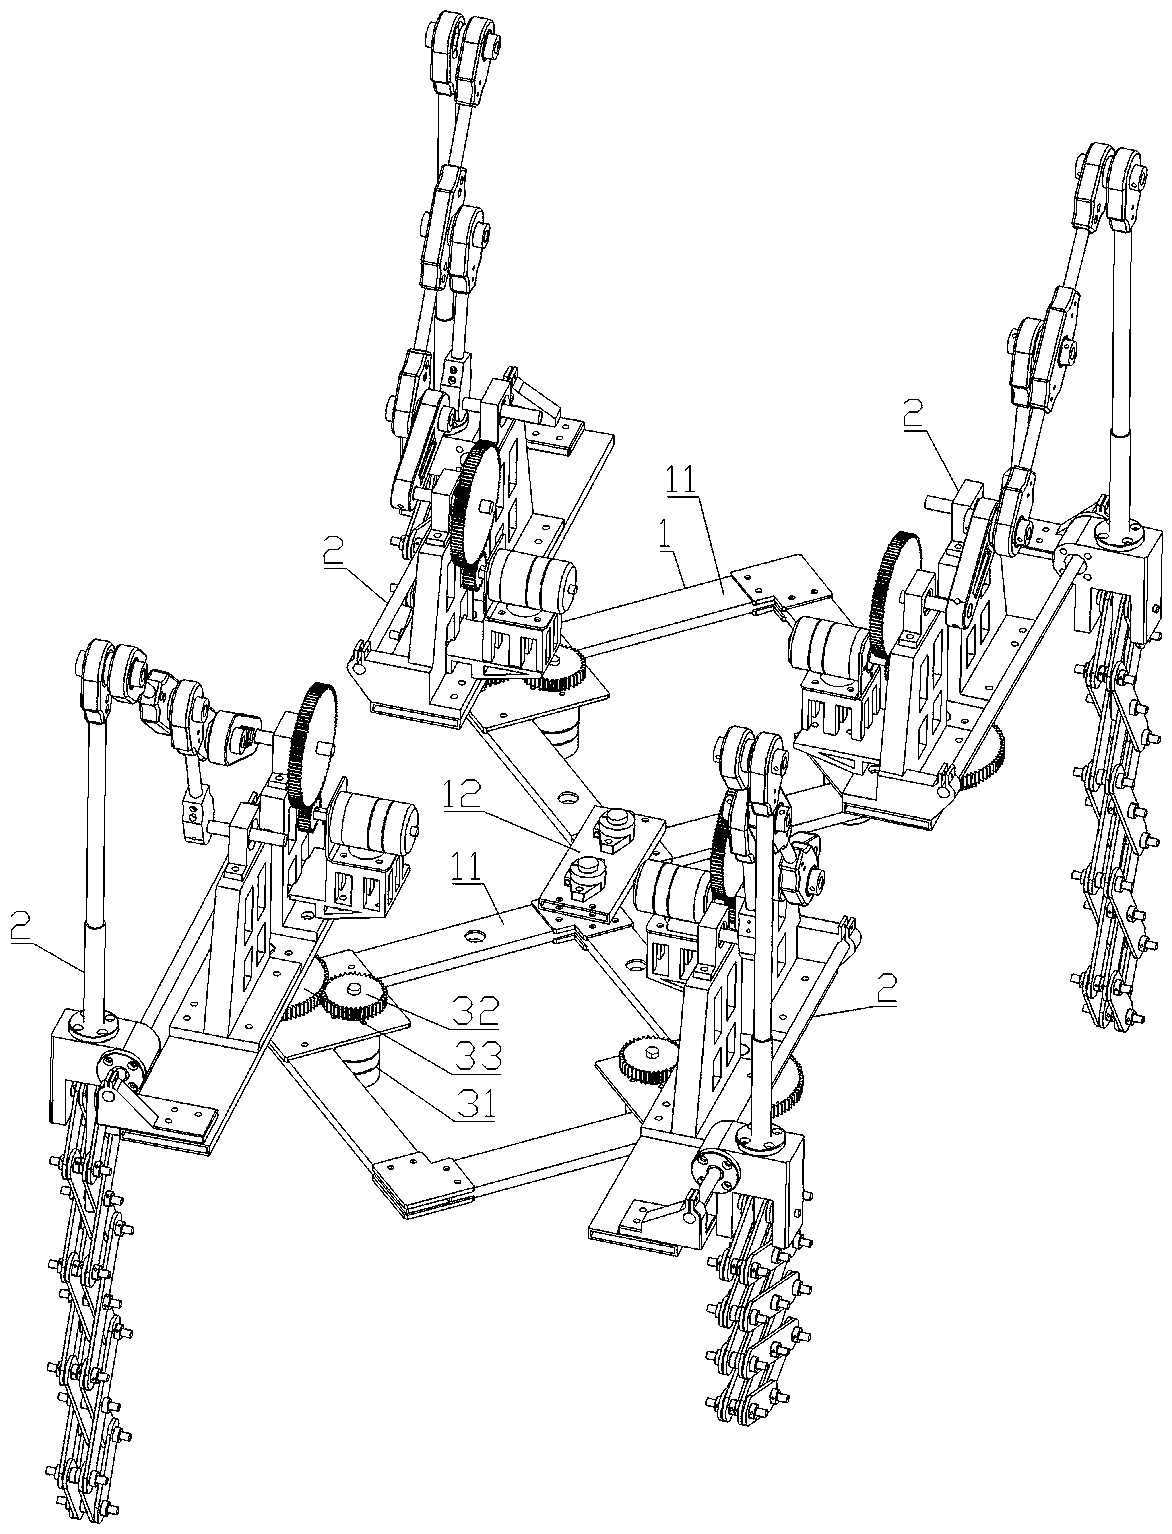 Quadruped robot based on four-bar mechanism